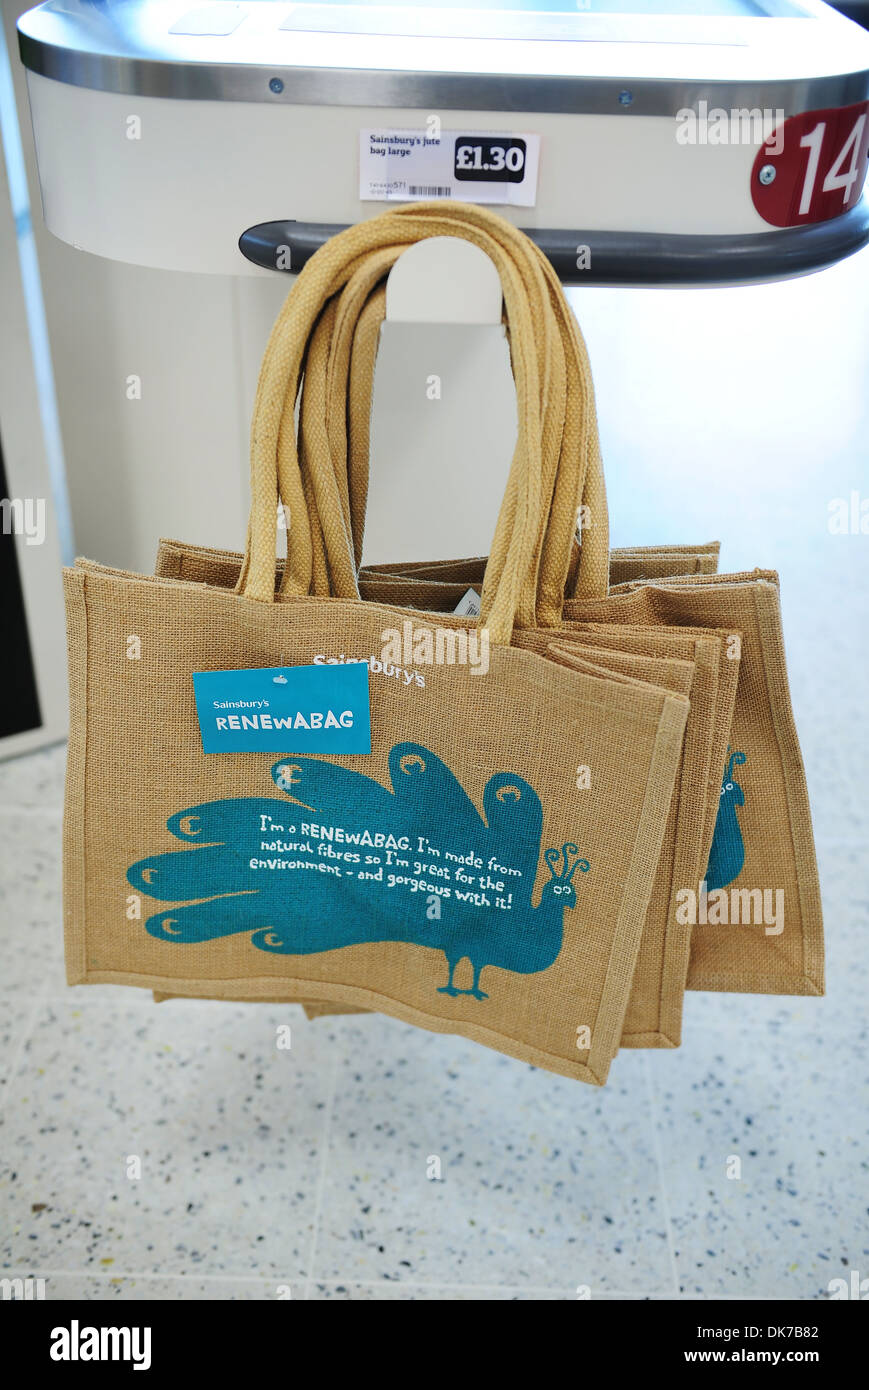 Supermarket interior showing reusable bags, Britain, UK Stock Photo